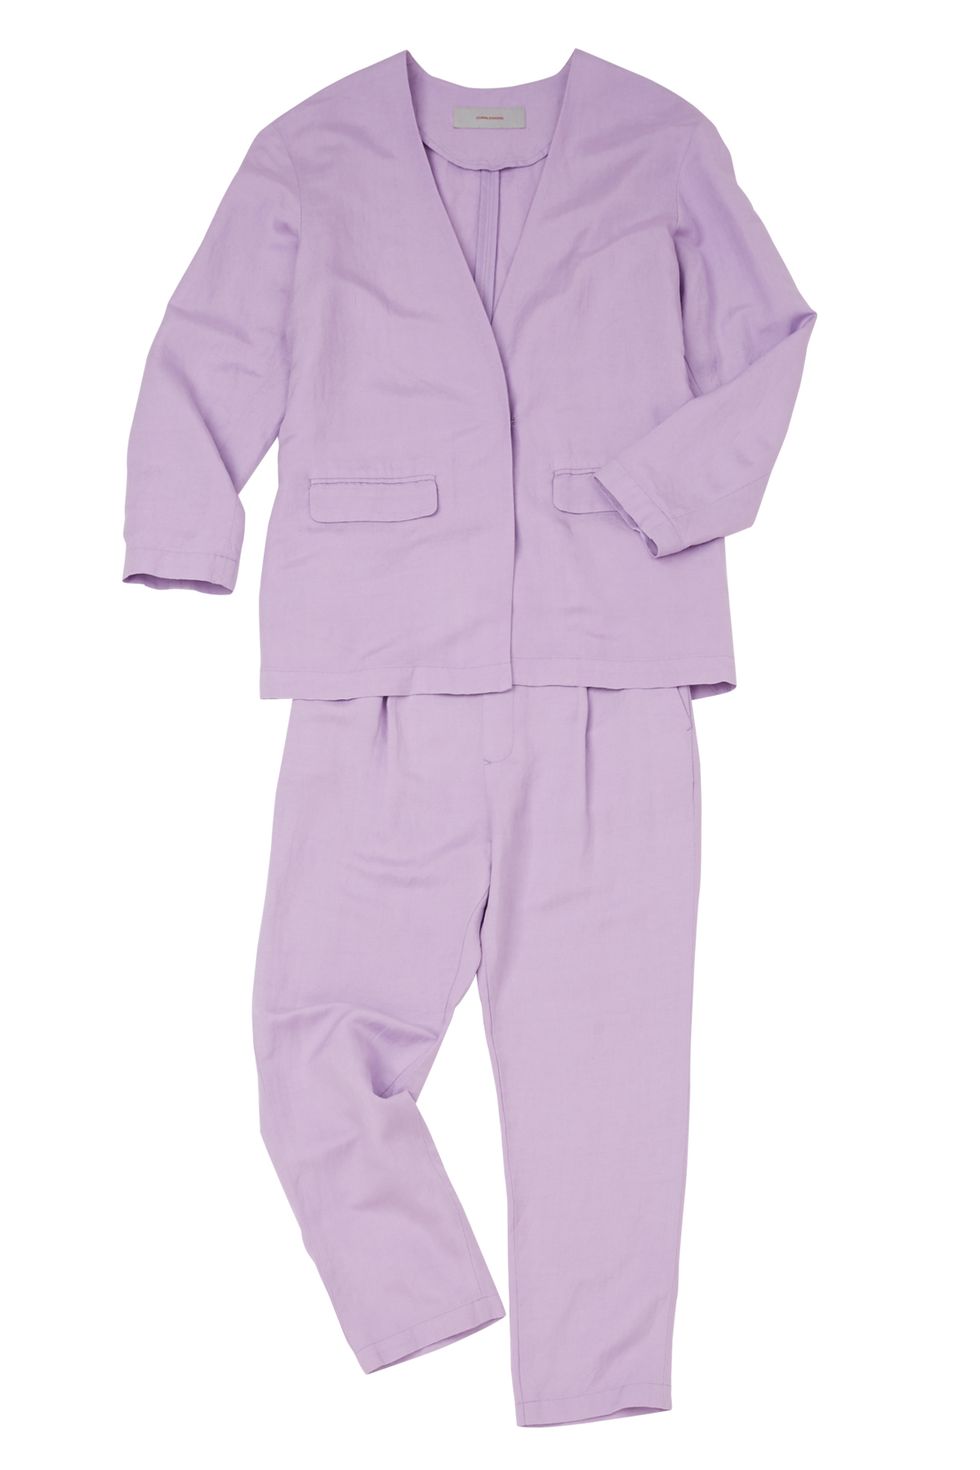 Clothing, Martial arts uniform, Purple, Pink, Product, Violet, Pajamas, Outerwear, Sleeve, Suit, 